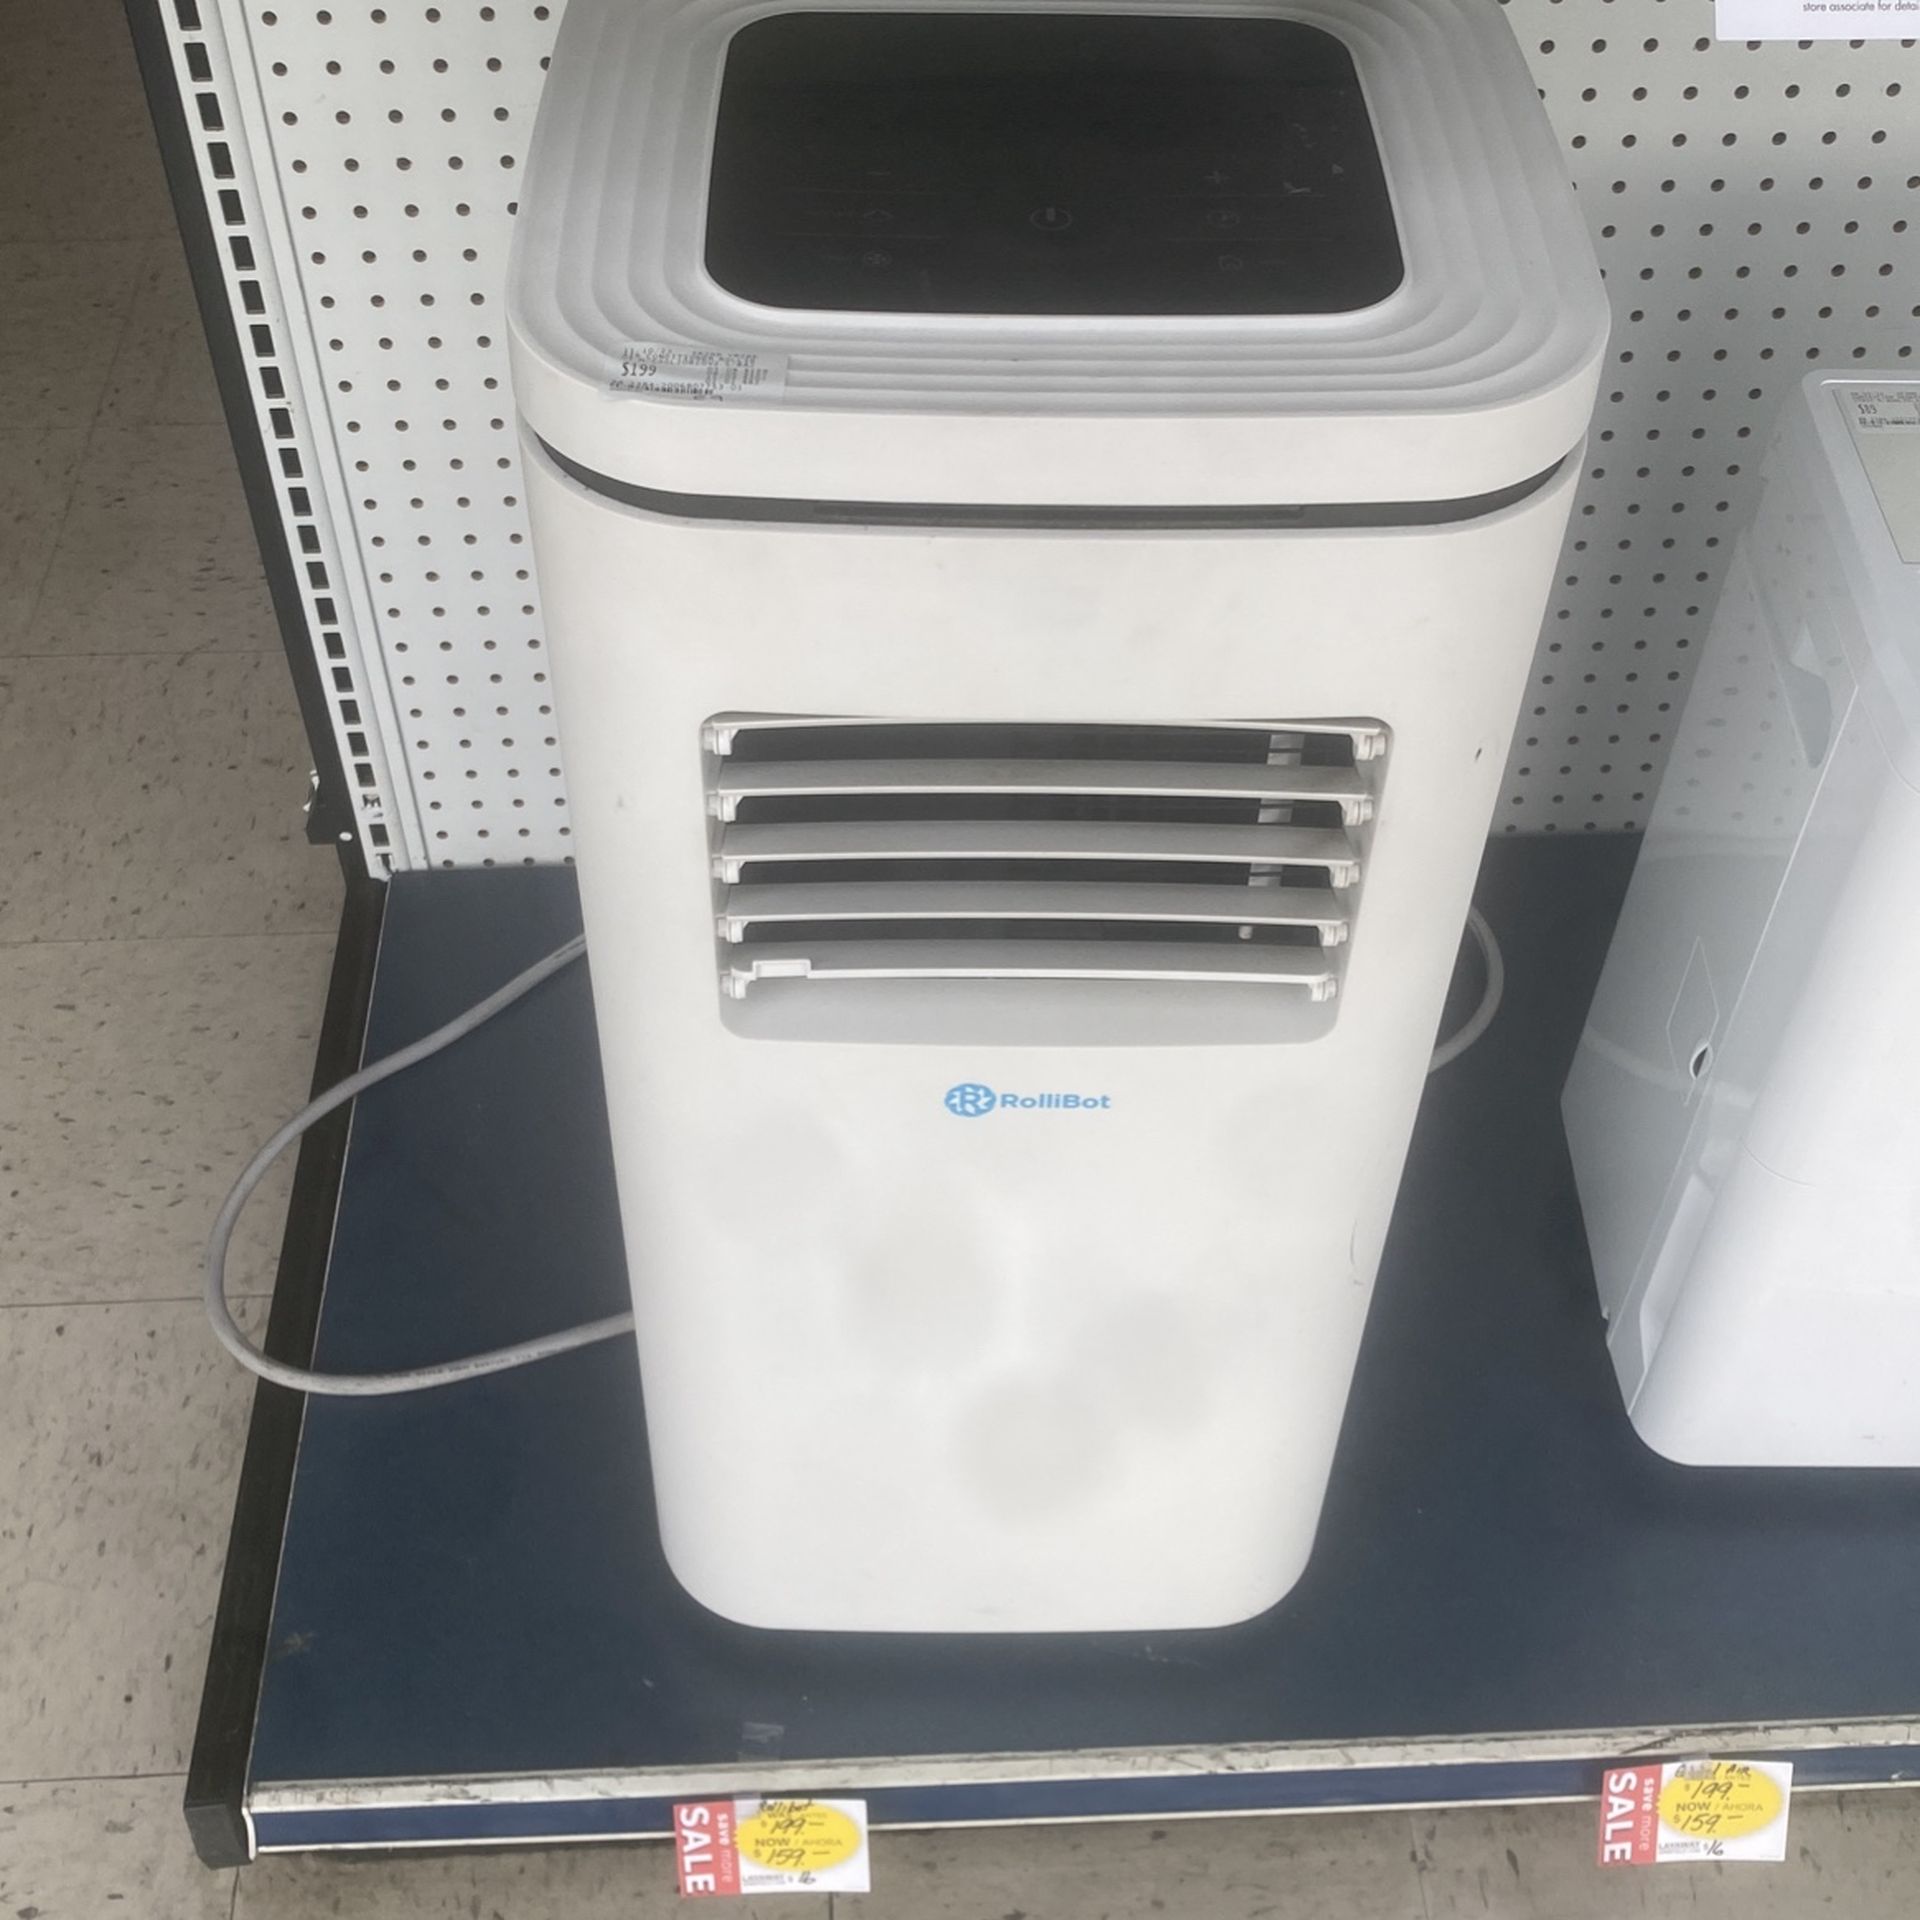 Rollibot Air Conditioner 